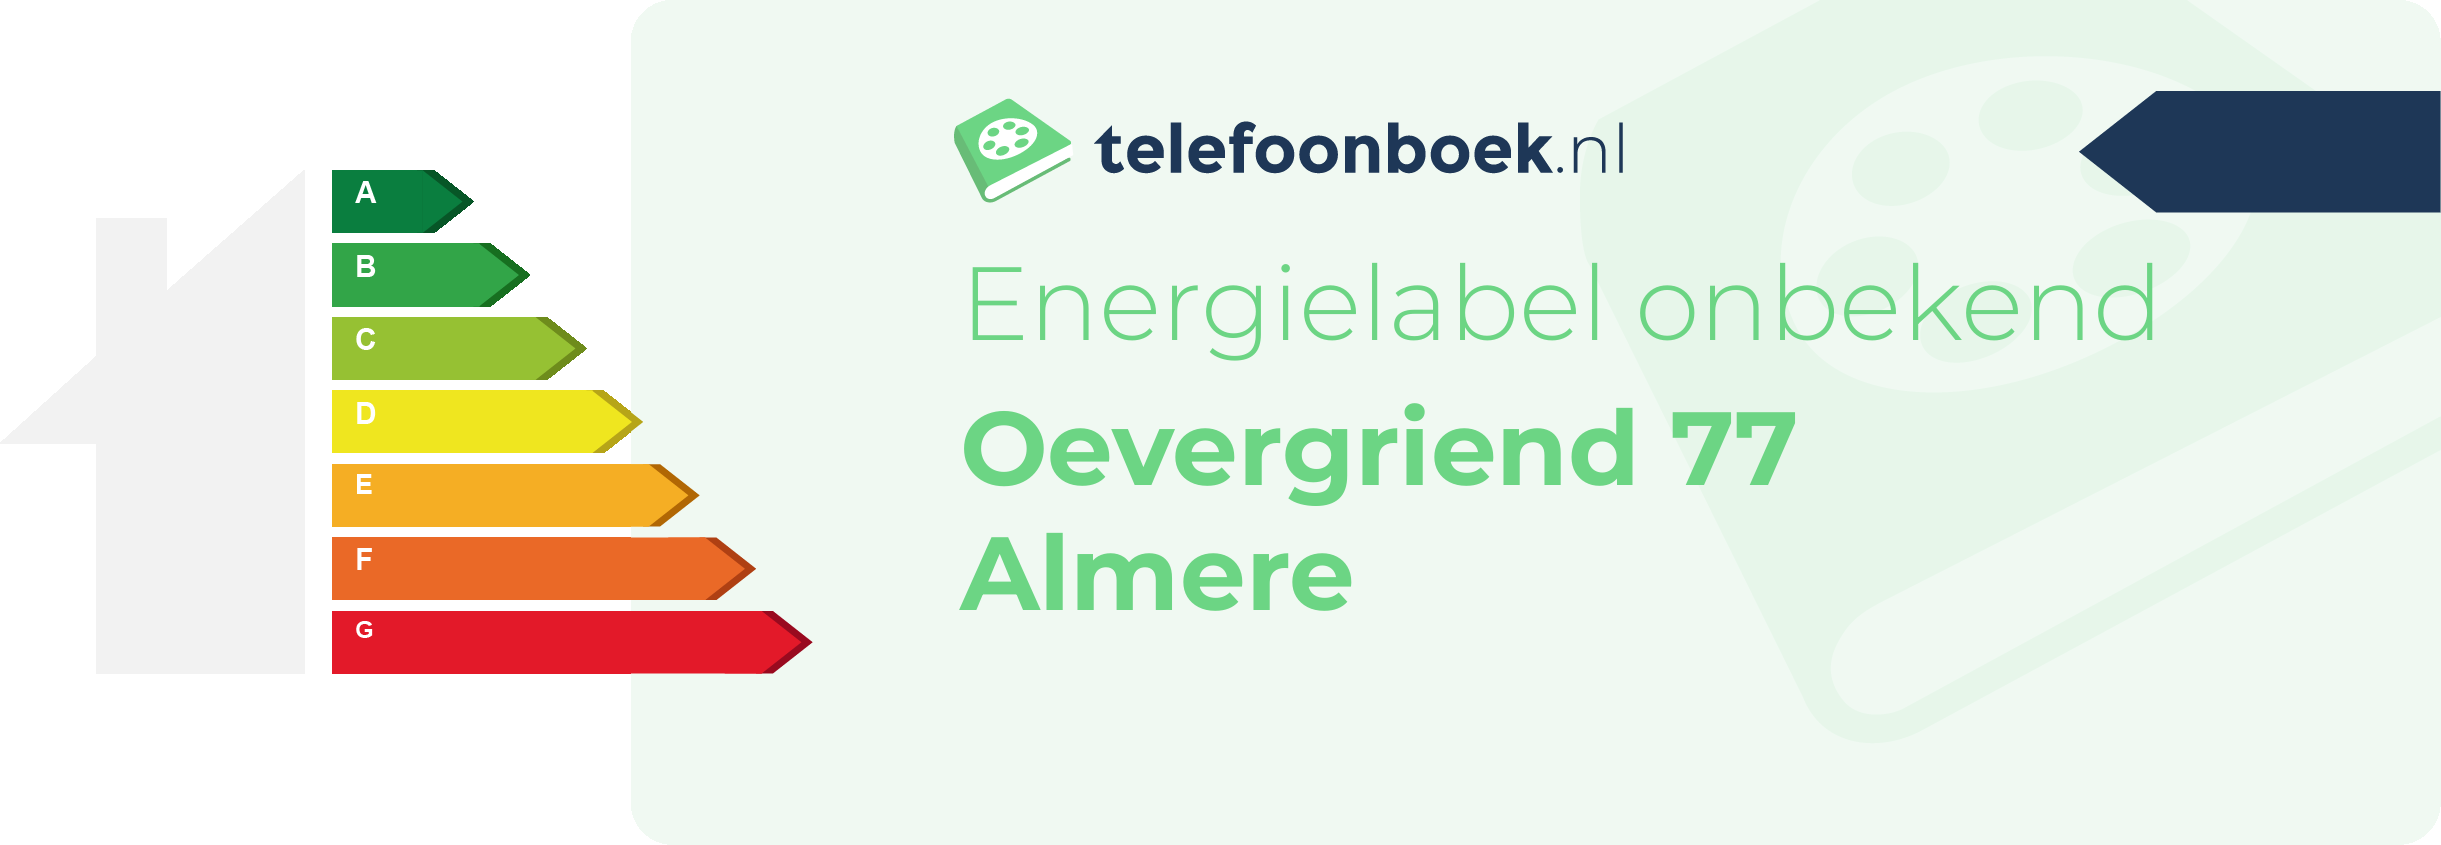 Energielabel Oevergriend 77 Almere